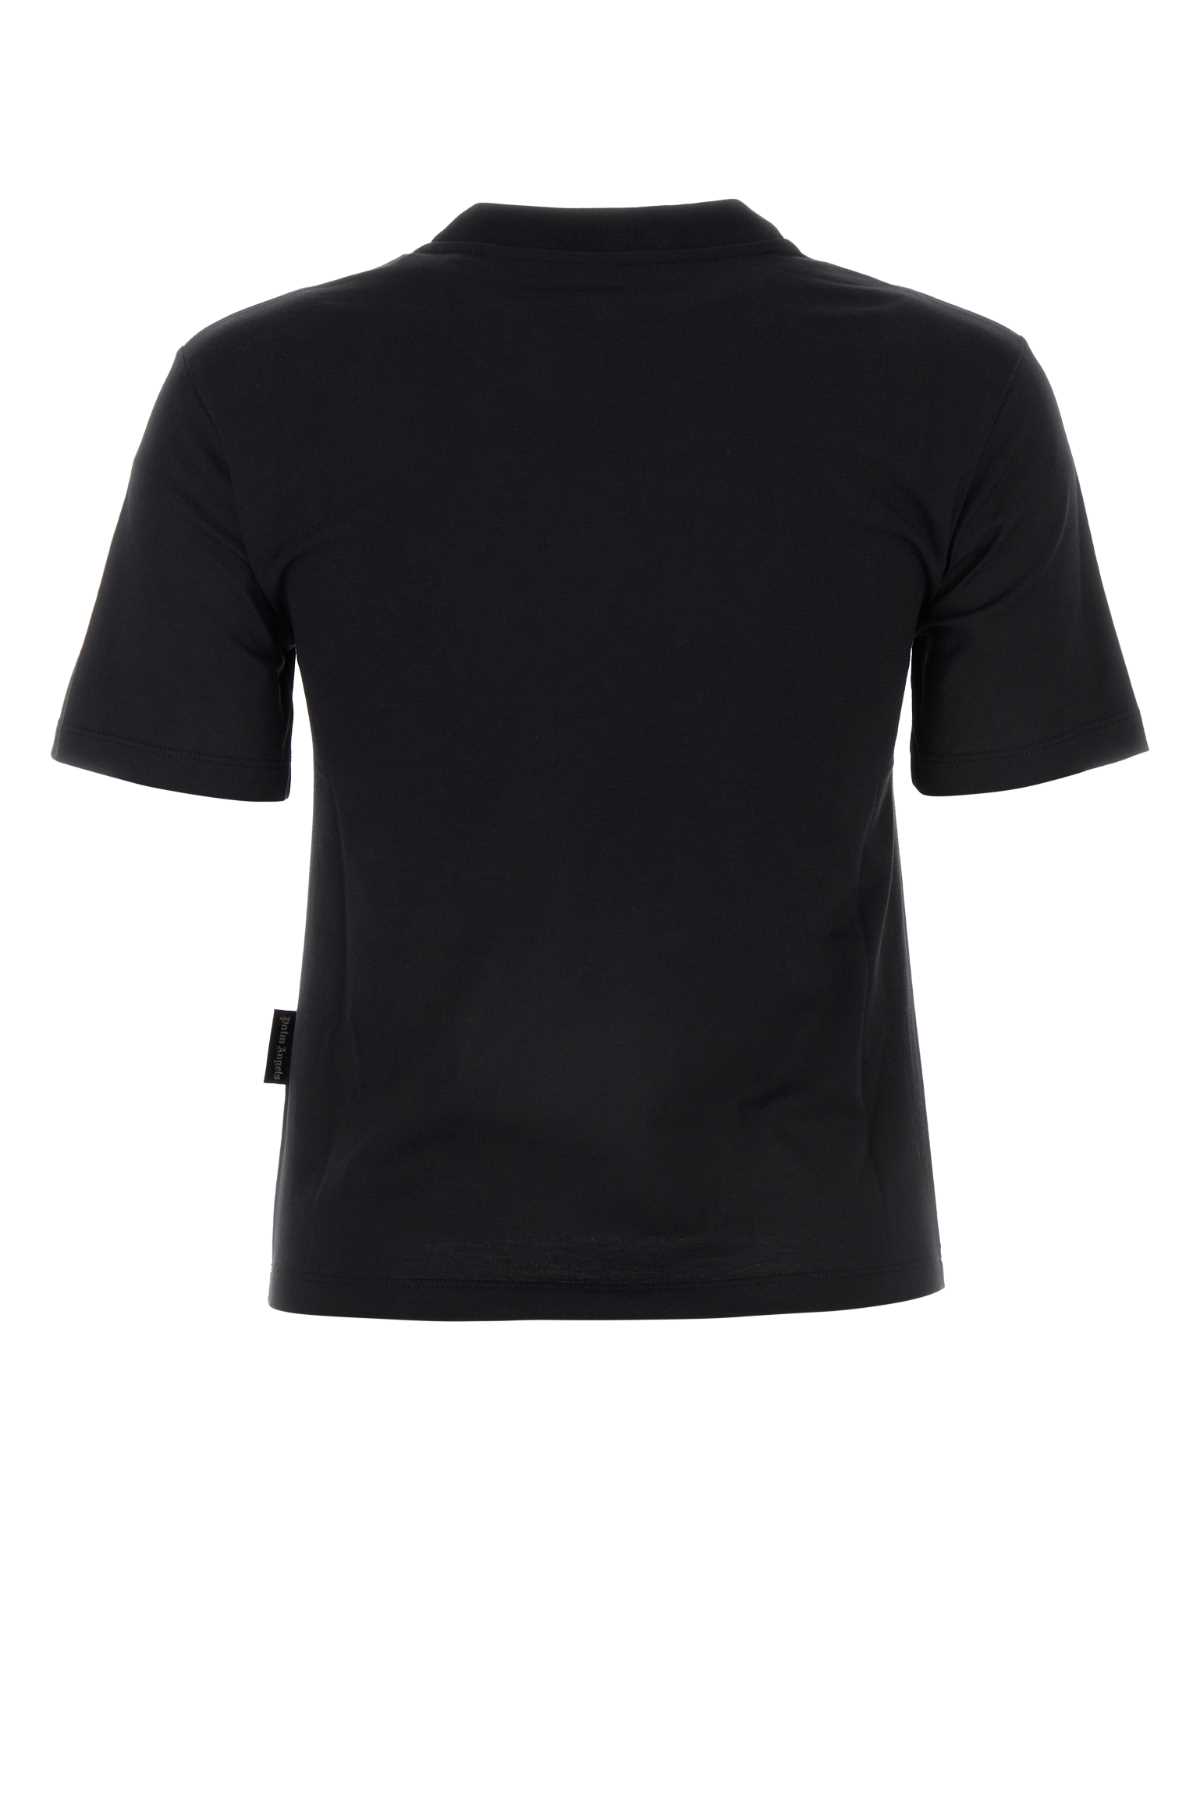 Palm Angels Black Cotton T-shirt In Blackblack